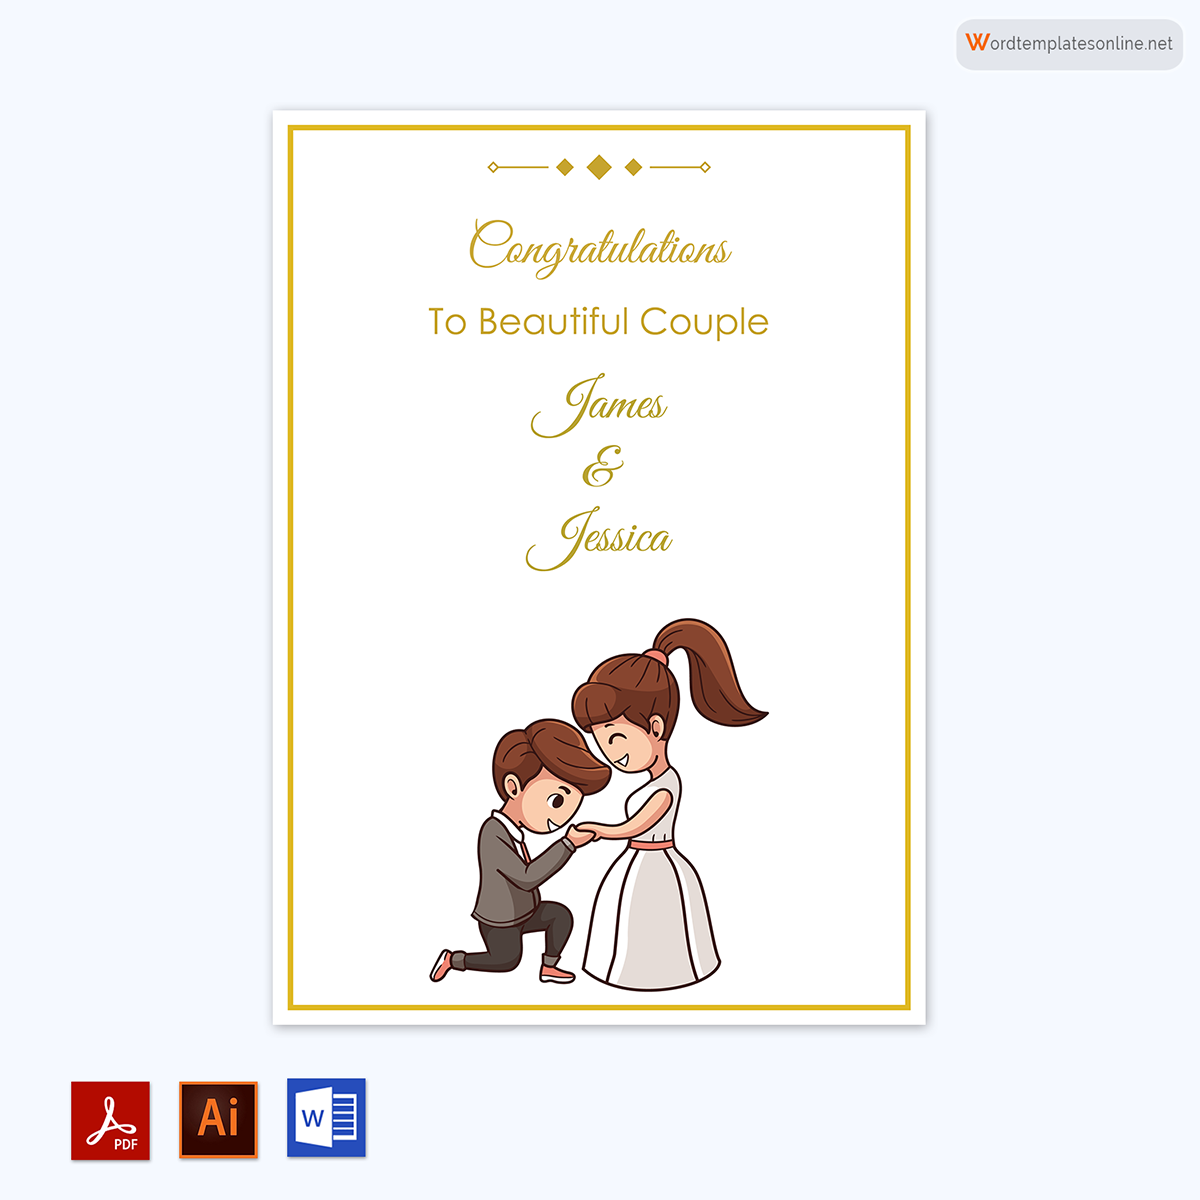 "Congratulations card template with customizable design"